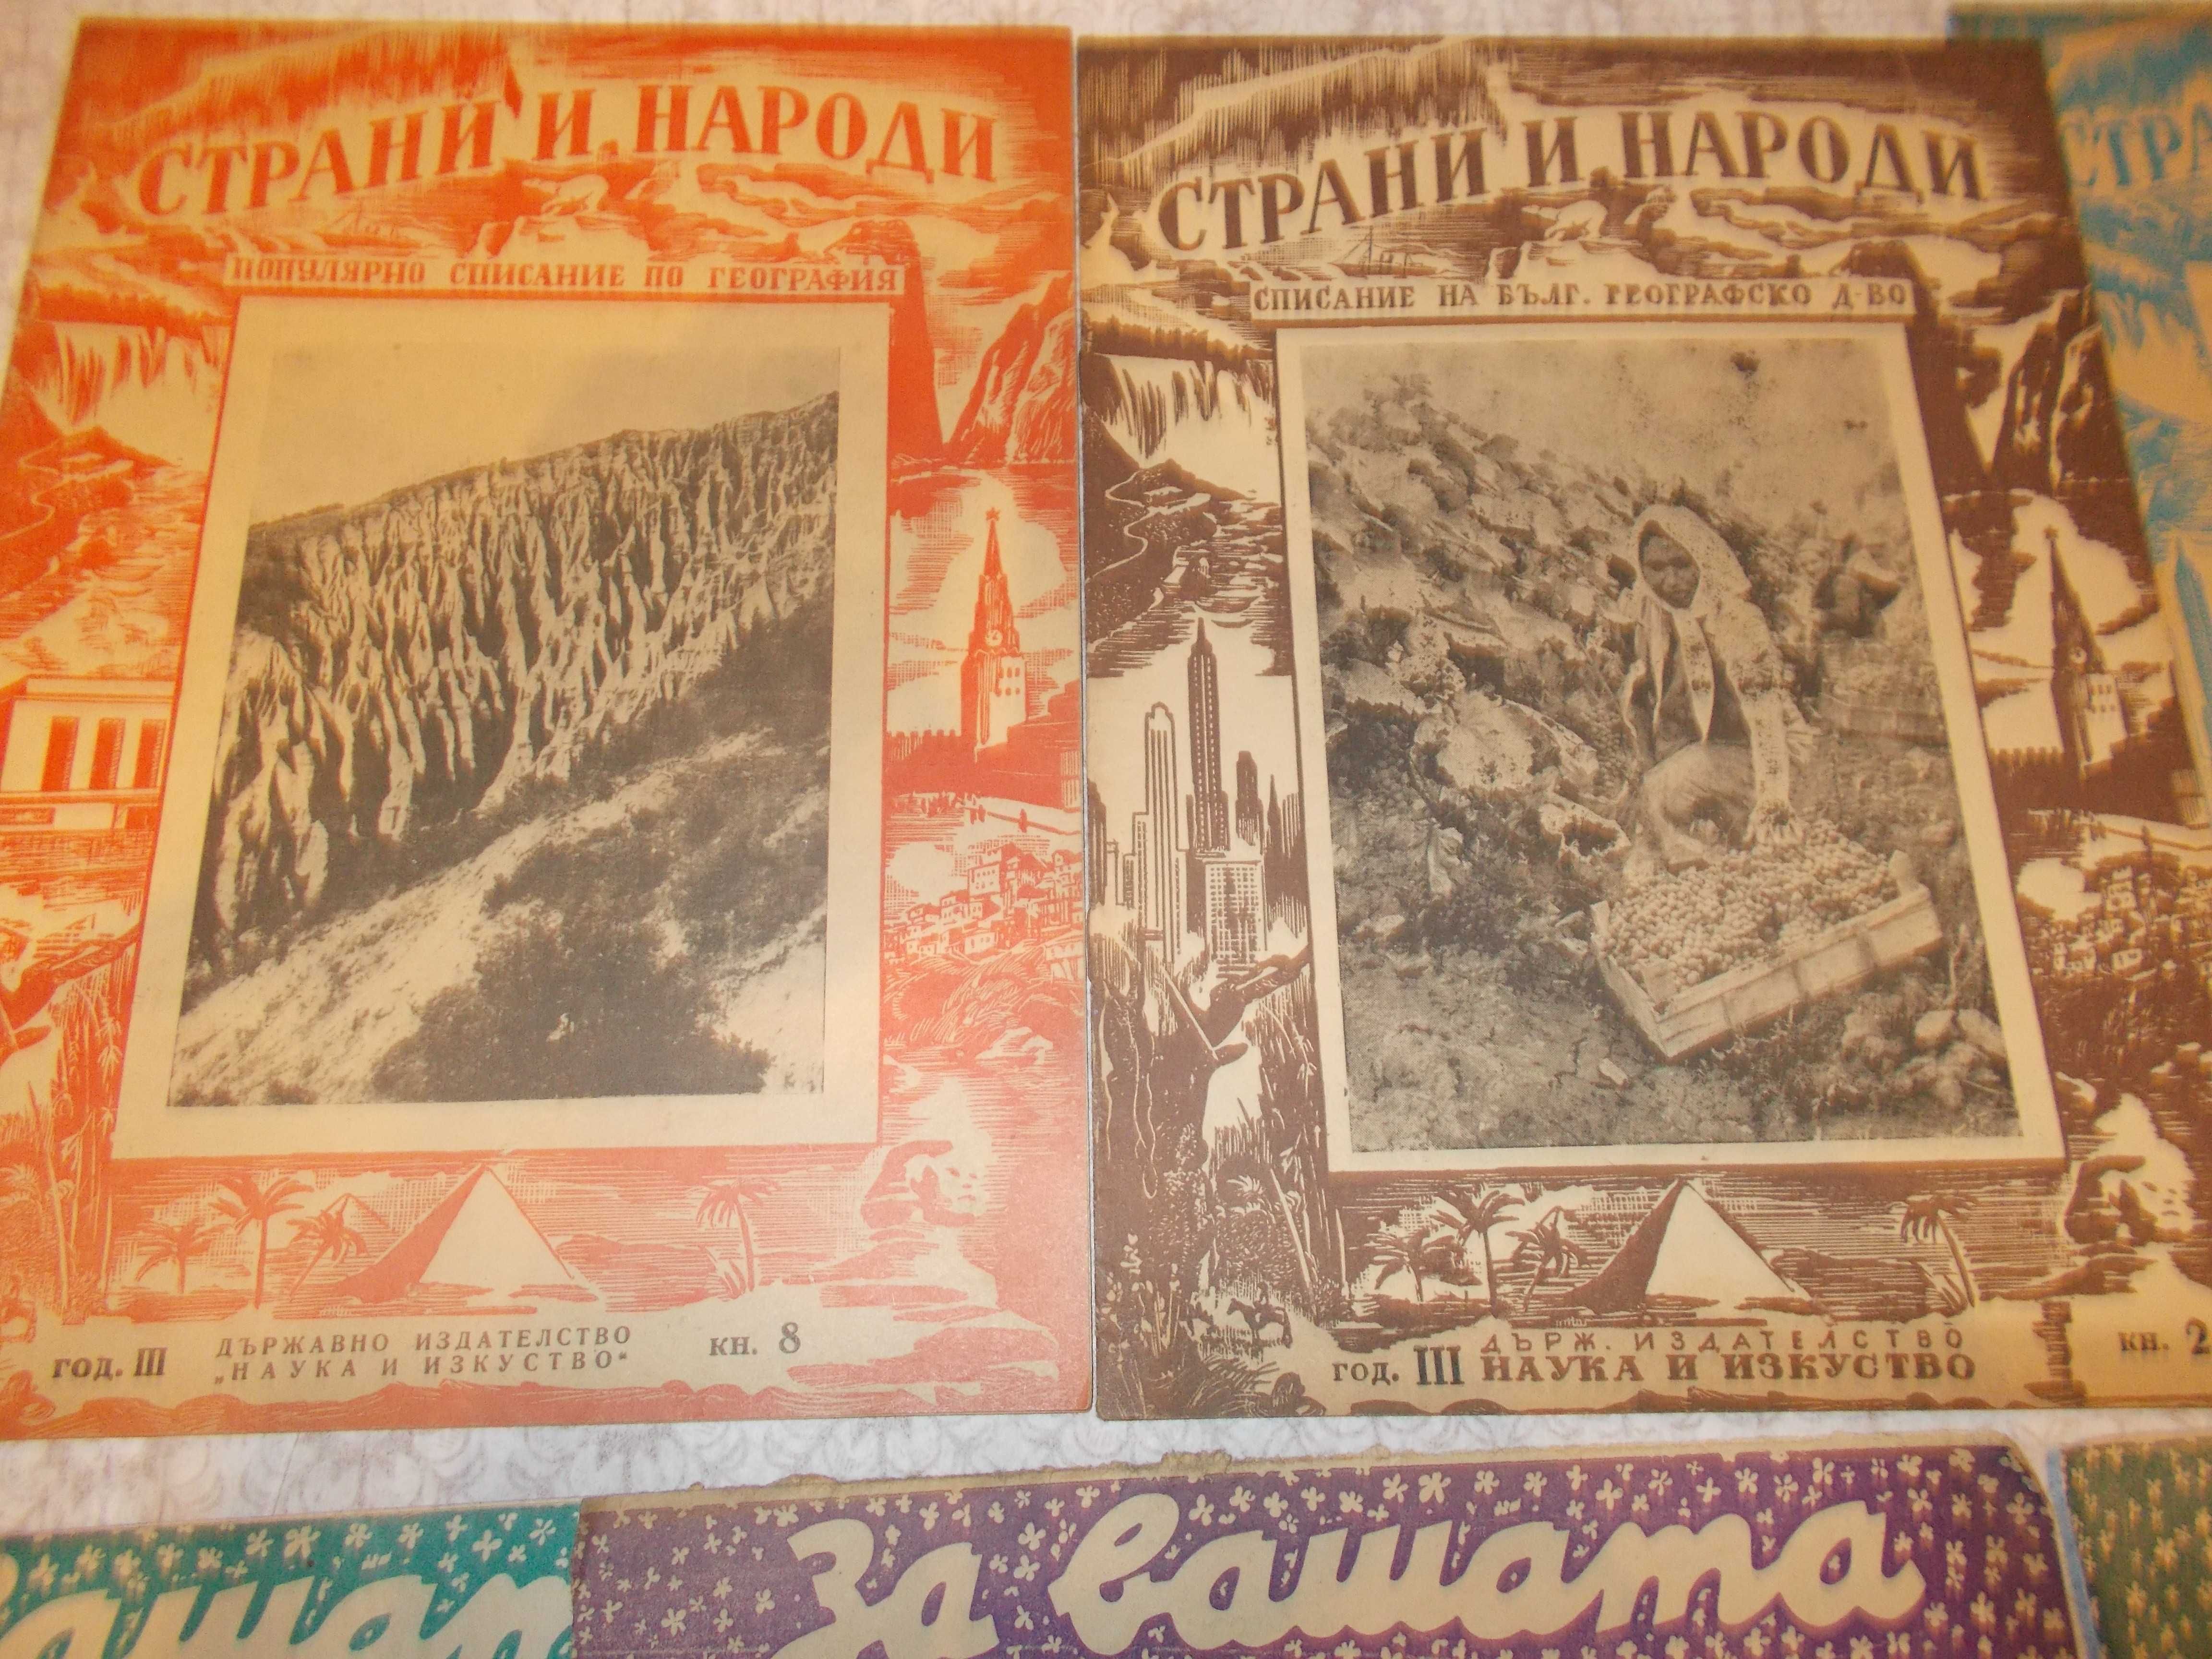 Лот стари вестници / списания около 1940-1950 год